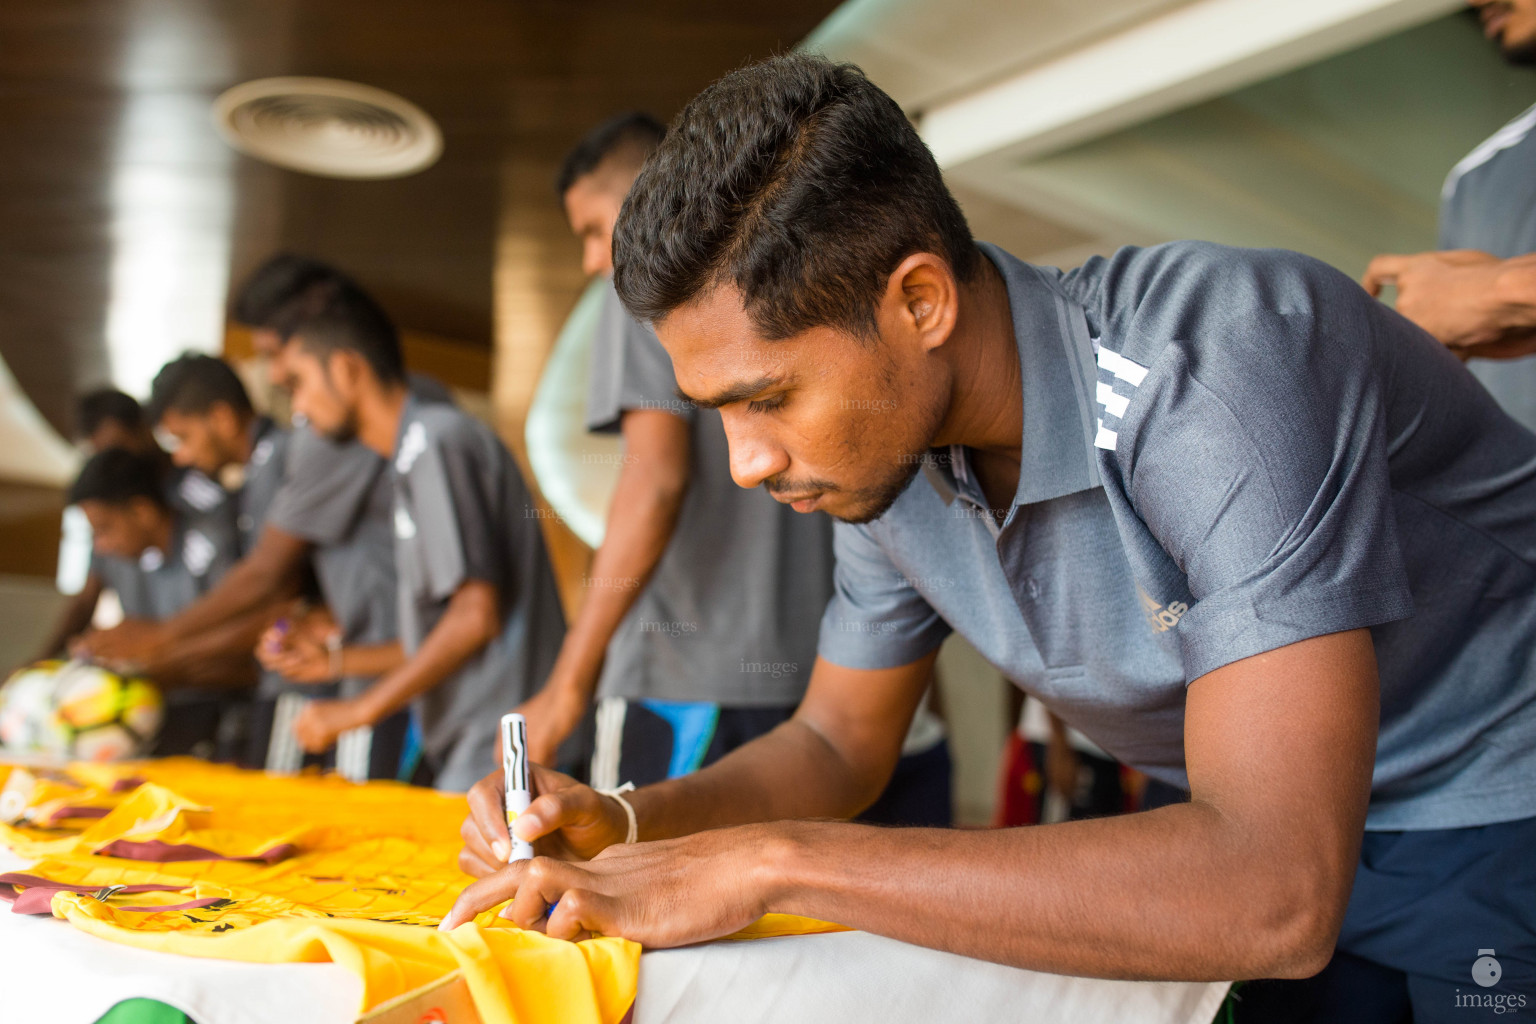 Jersey, balls signing and team photos SAFF Suzuki Cup 2018 in Dhaka, Bangladesh, Thursday, September 06, 2018. (Images.mv Photo/ Hussain Sinan)